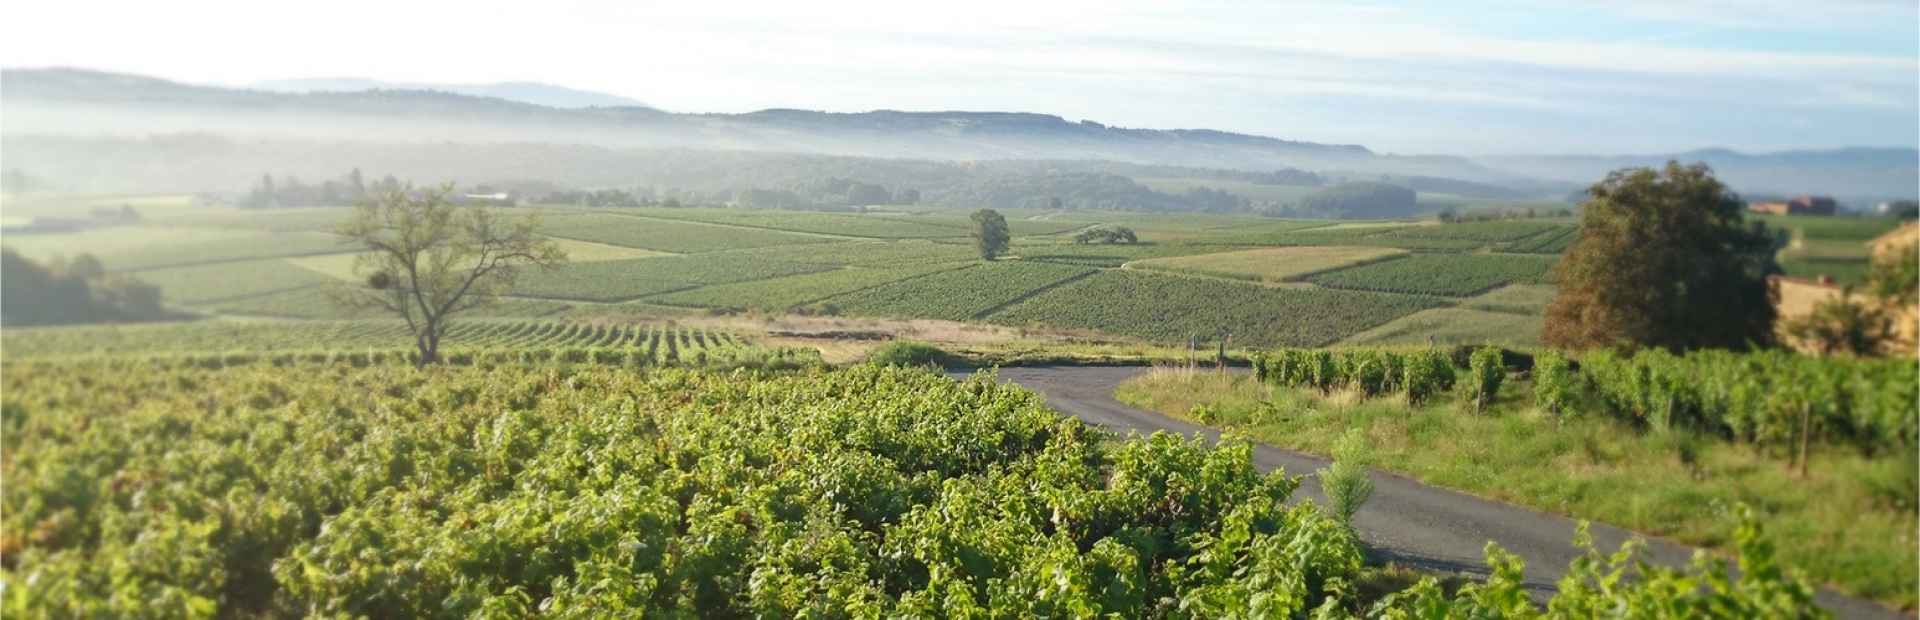 Winesof the appellation Crémant-de-bourgogne